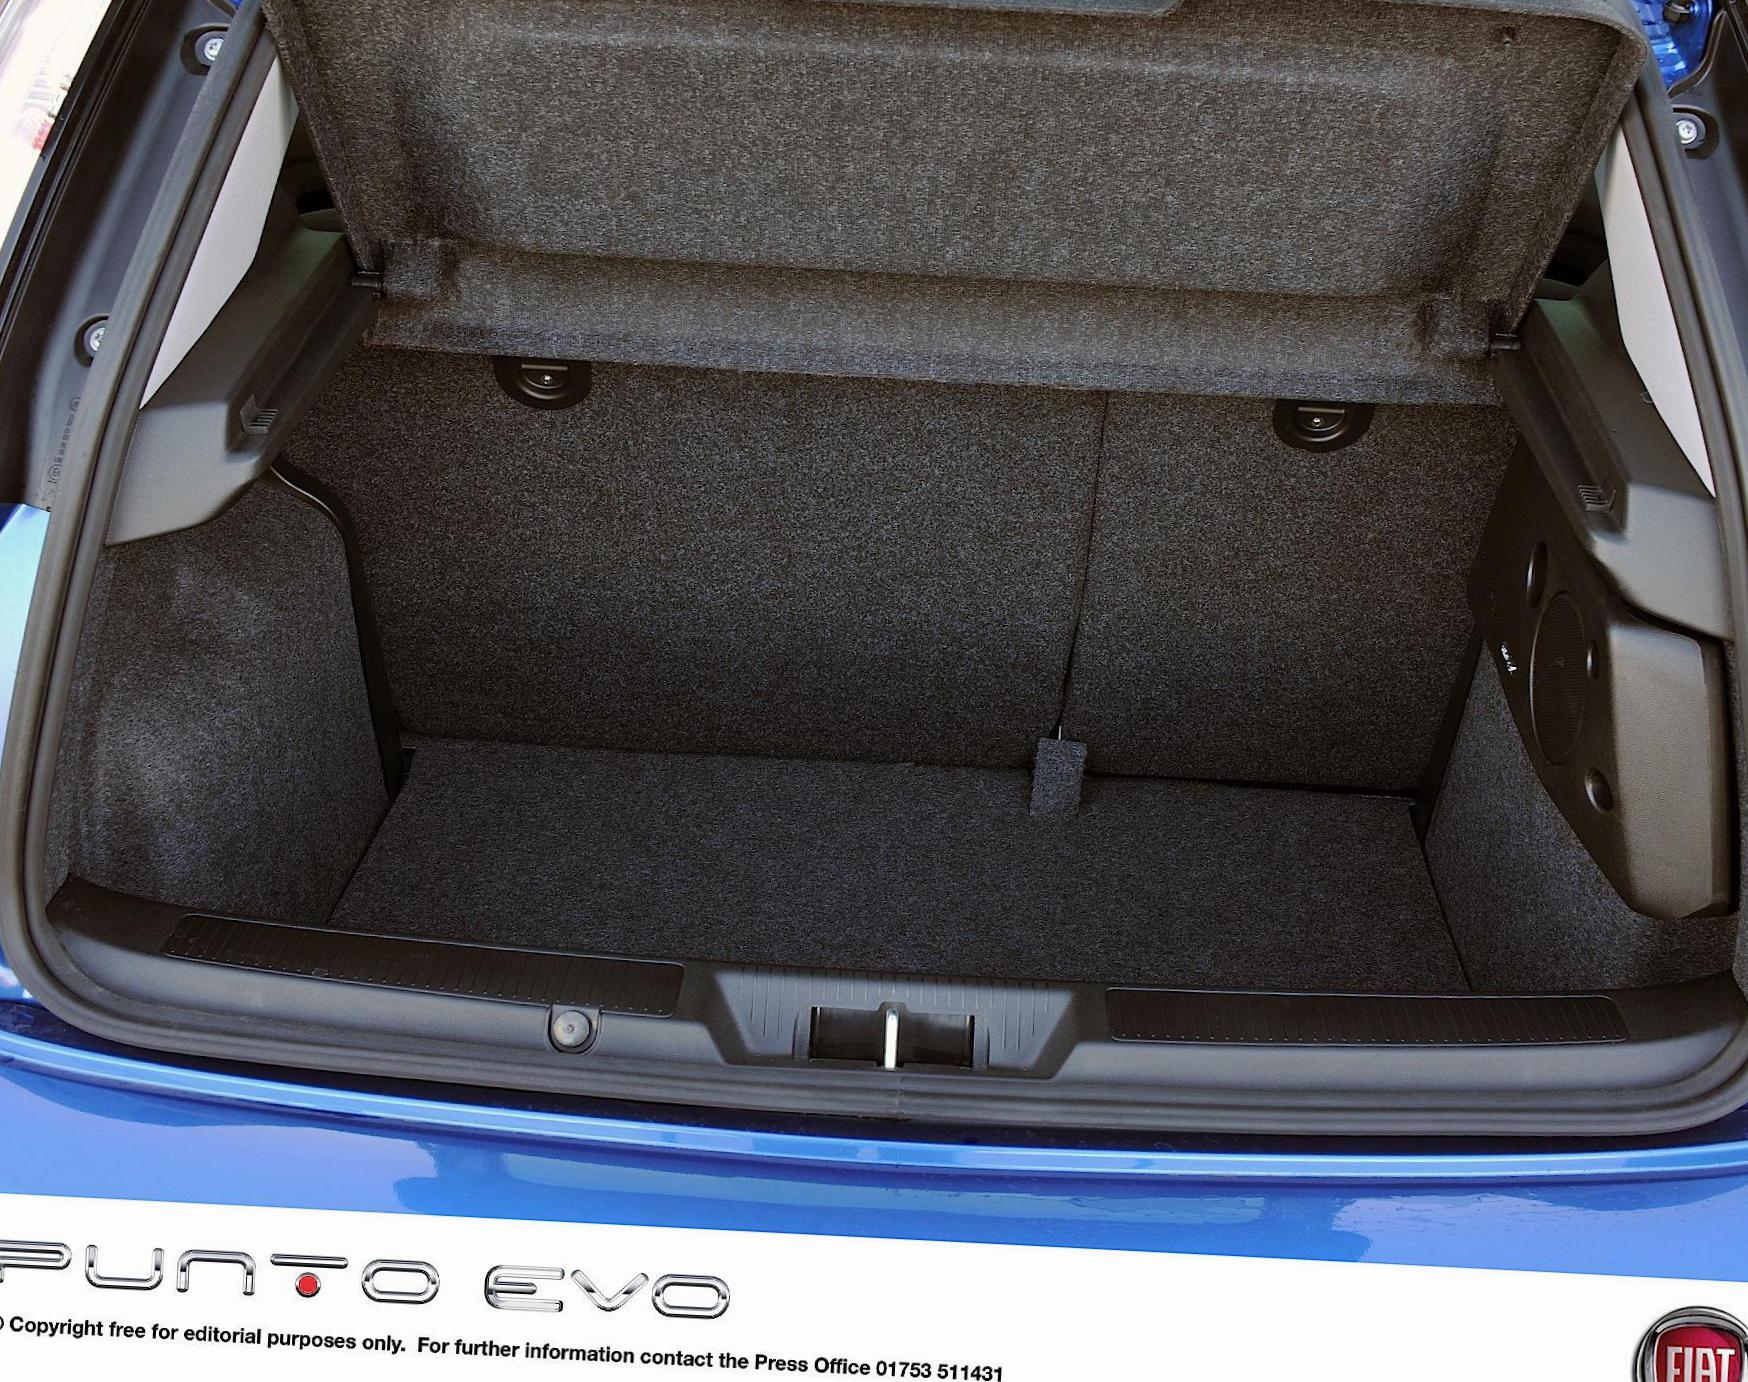 Fiat Punto Evo 5 doors price sedan